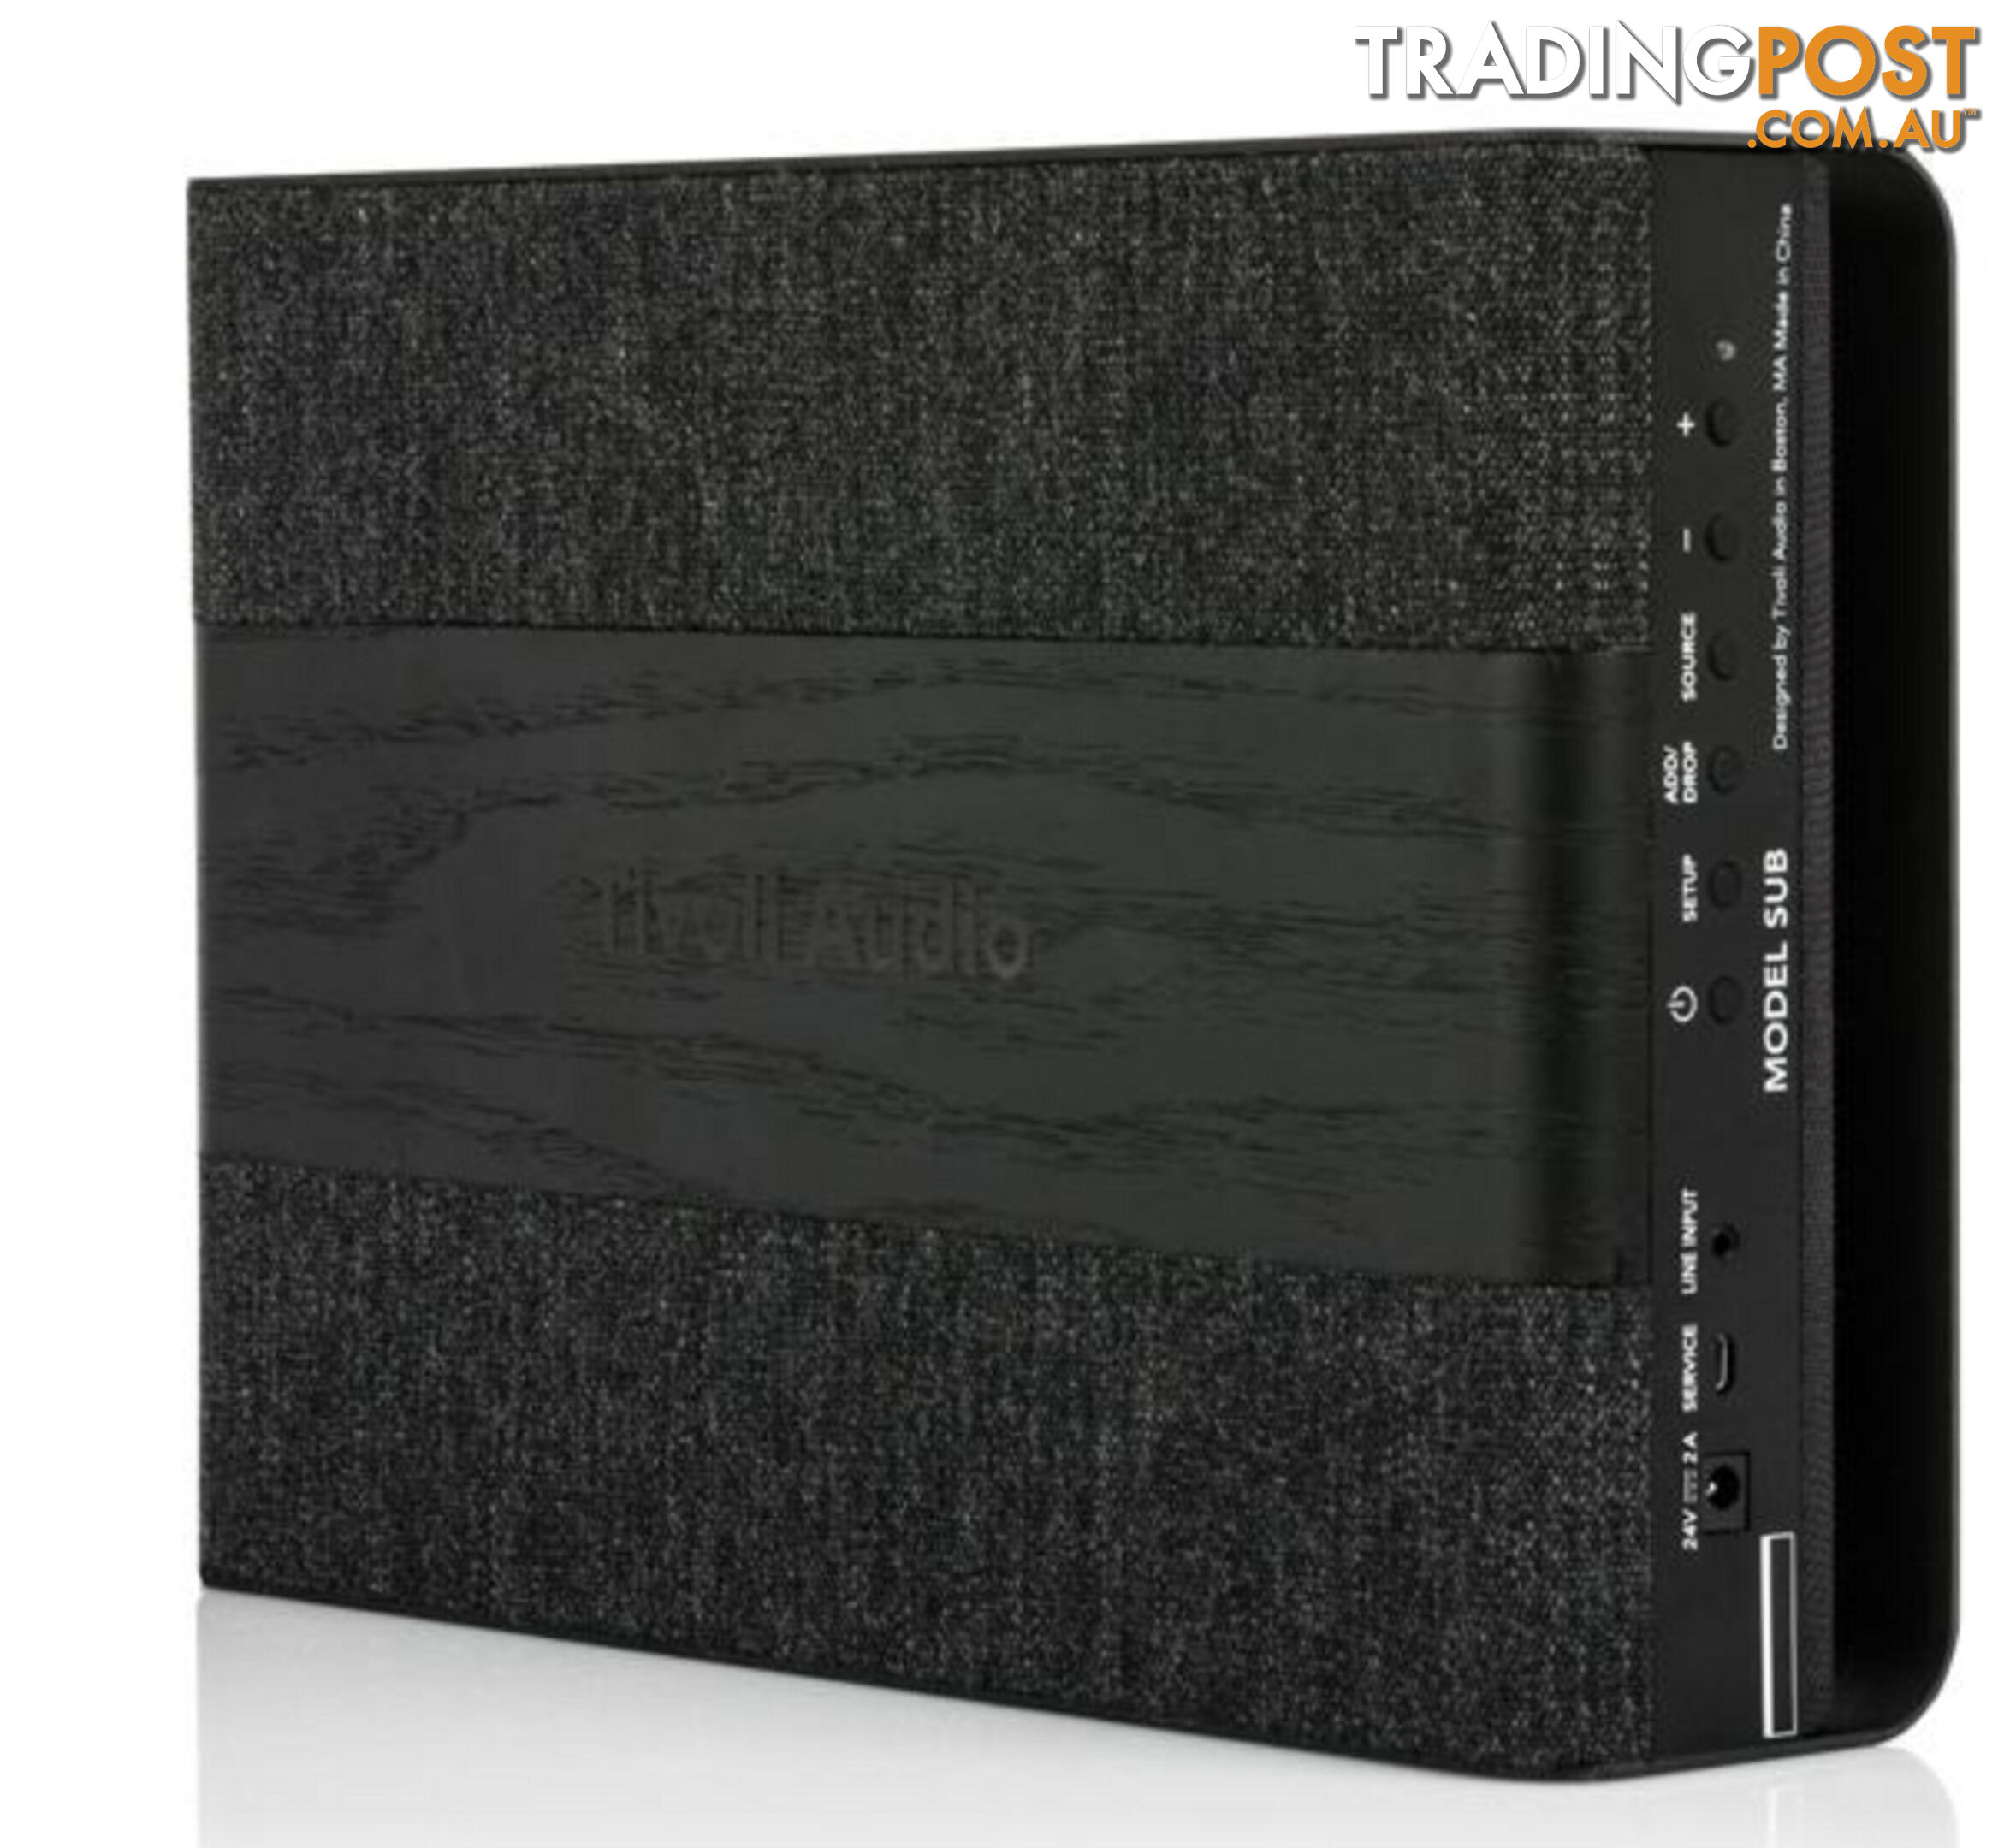 Tivoli Audio Model Sub in Black & Black